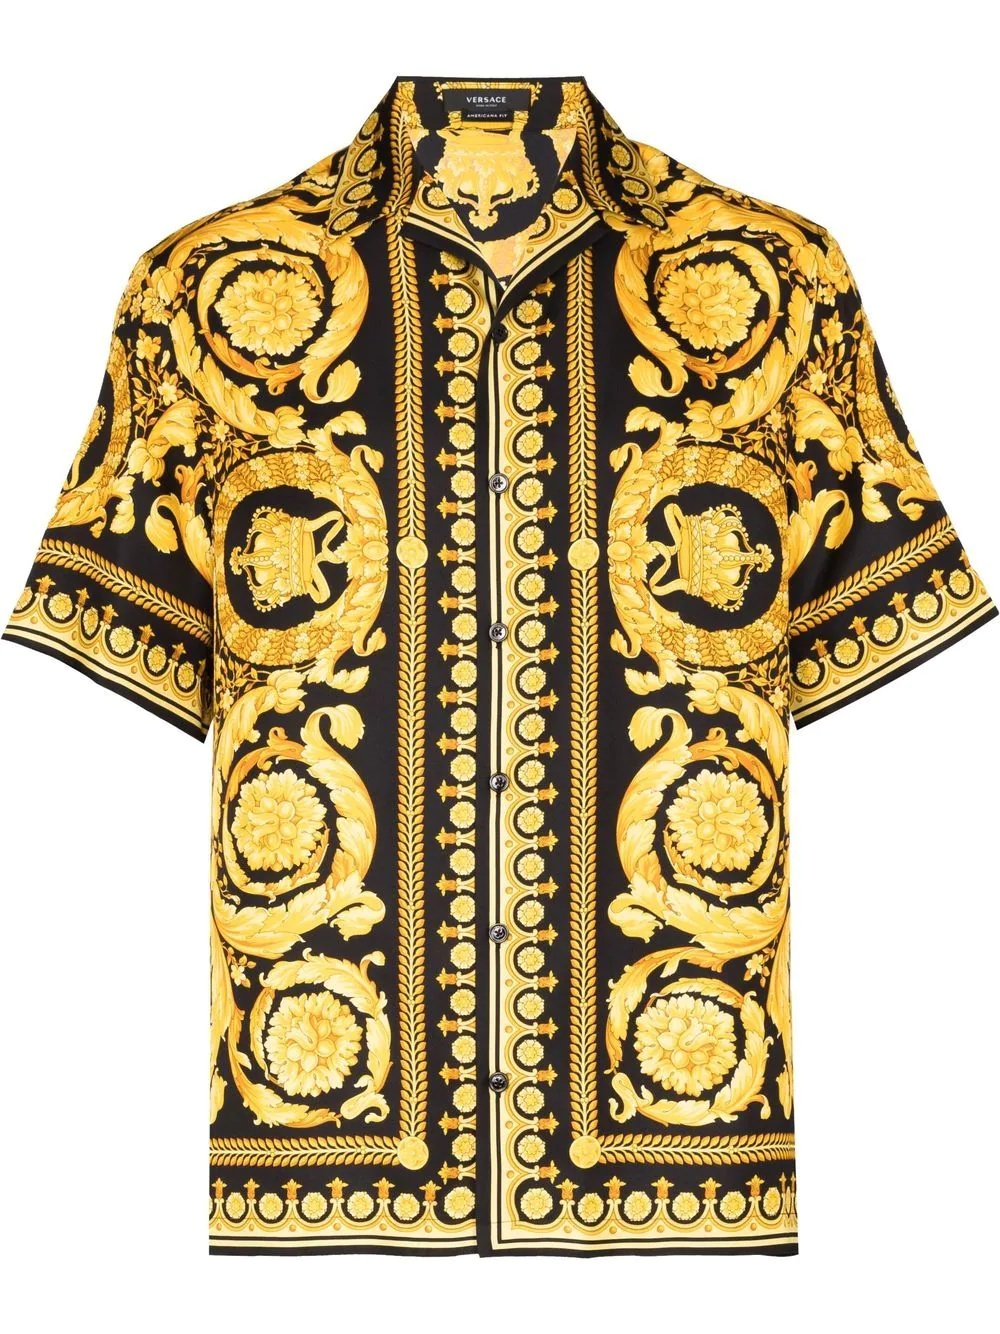 Barocco print silk shirt - 1